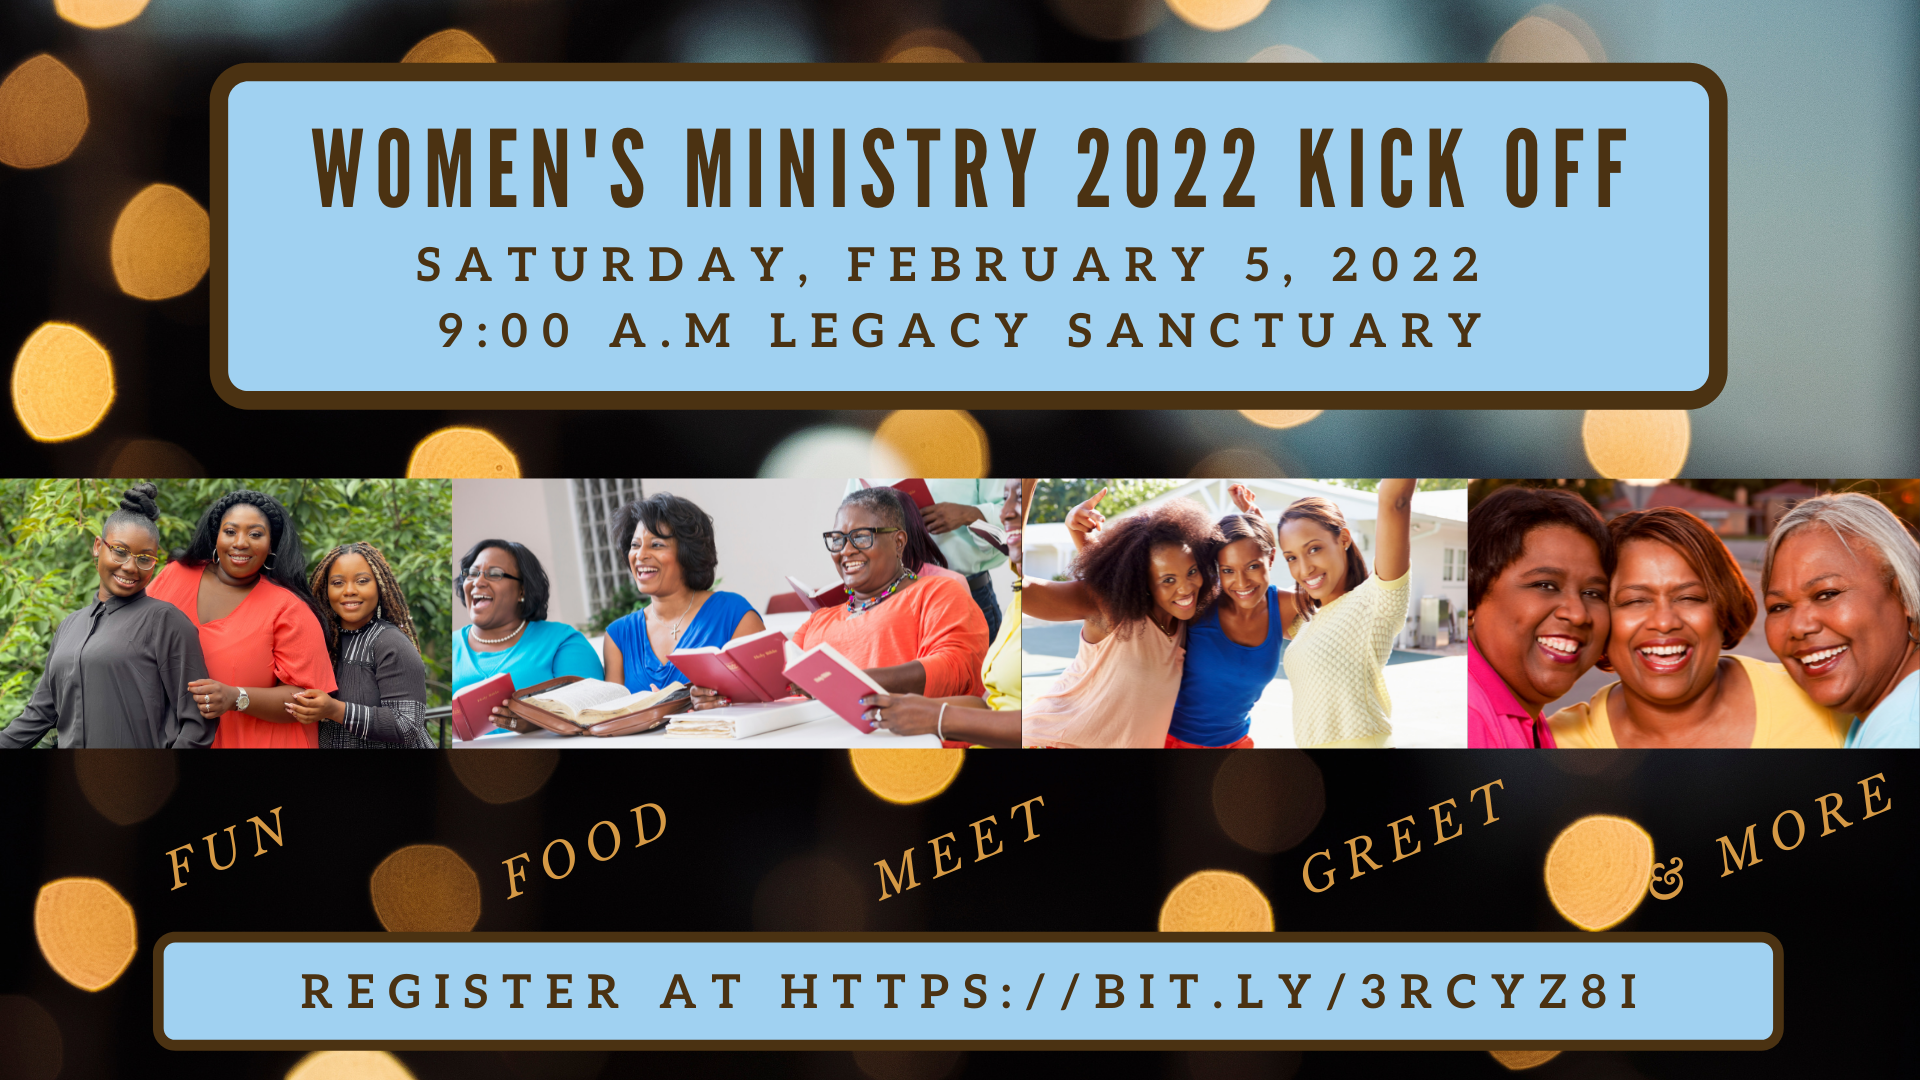 Women’s Ministry 2022 Kick Off head image